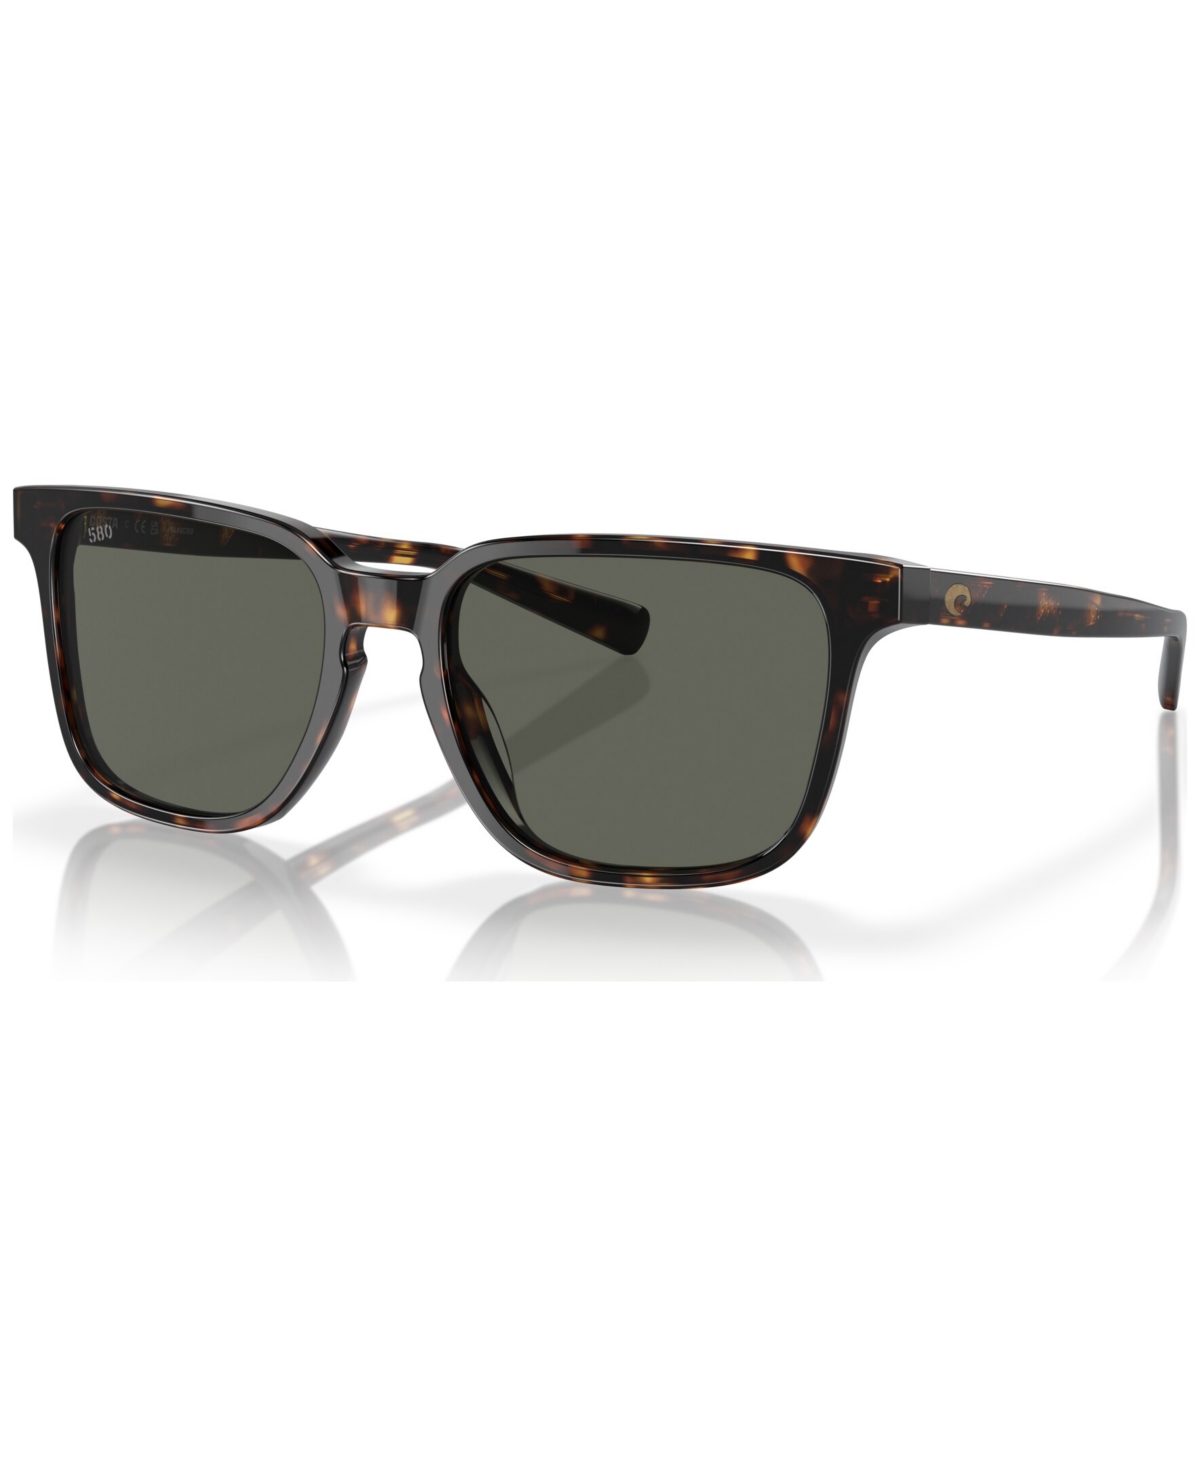 Men's Kailano Polarized Sunglasses, Polar 6S2013 - Tortoise